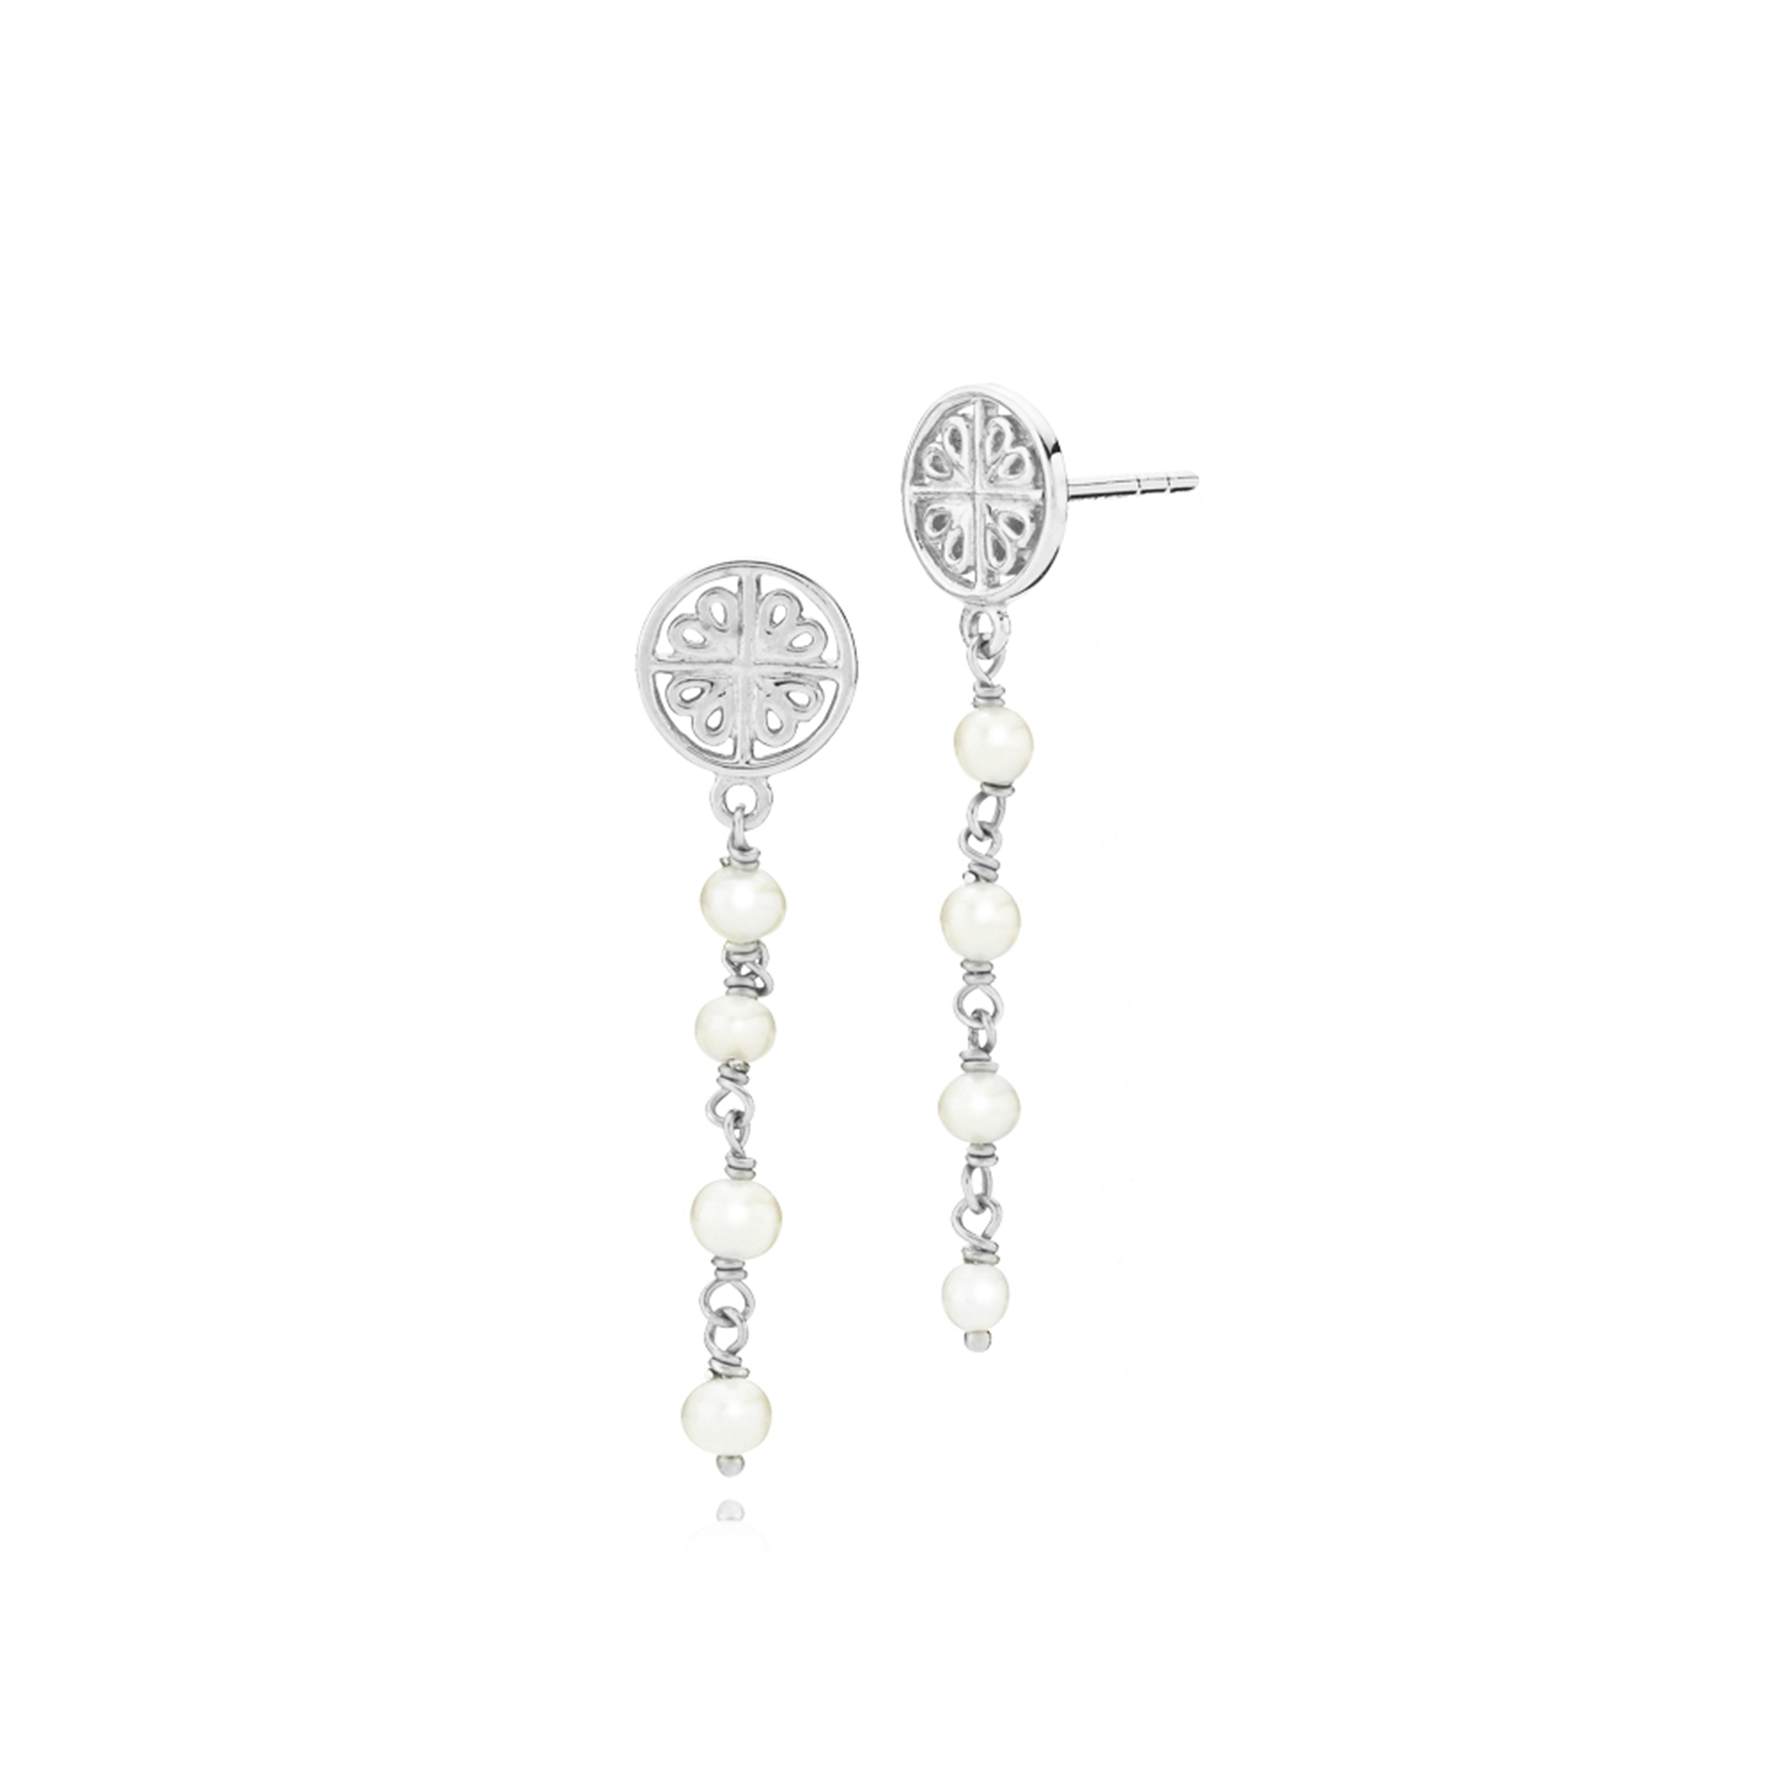 Balance Earrings With Pearl von Sistie in Silber Sterling 925|Freshwater Pearl|Blank